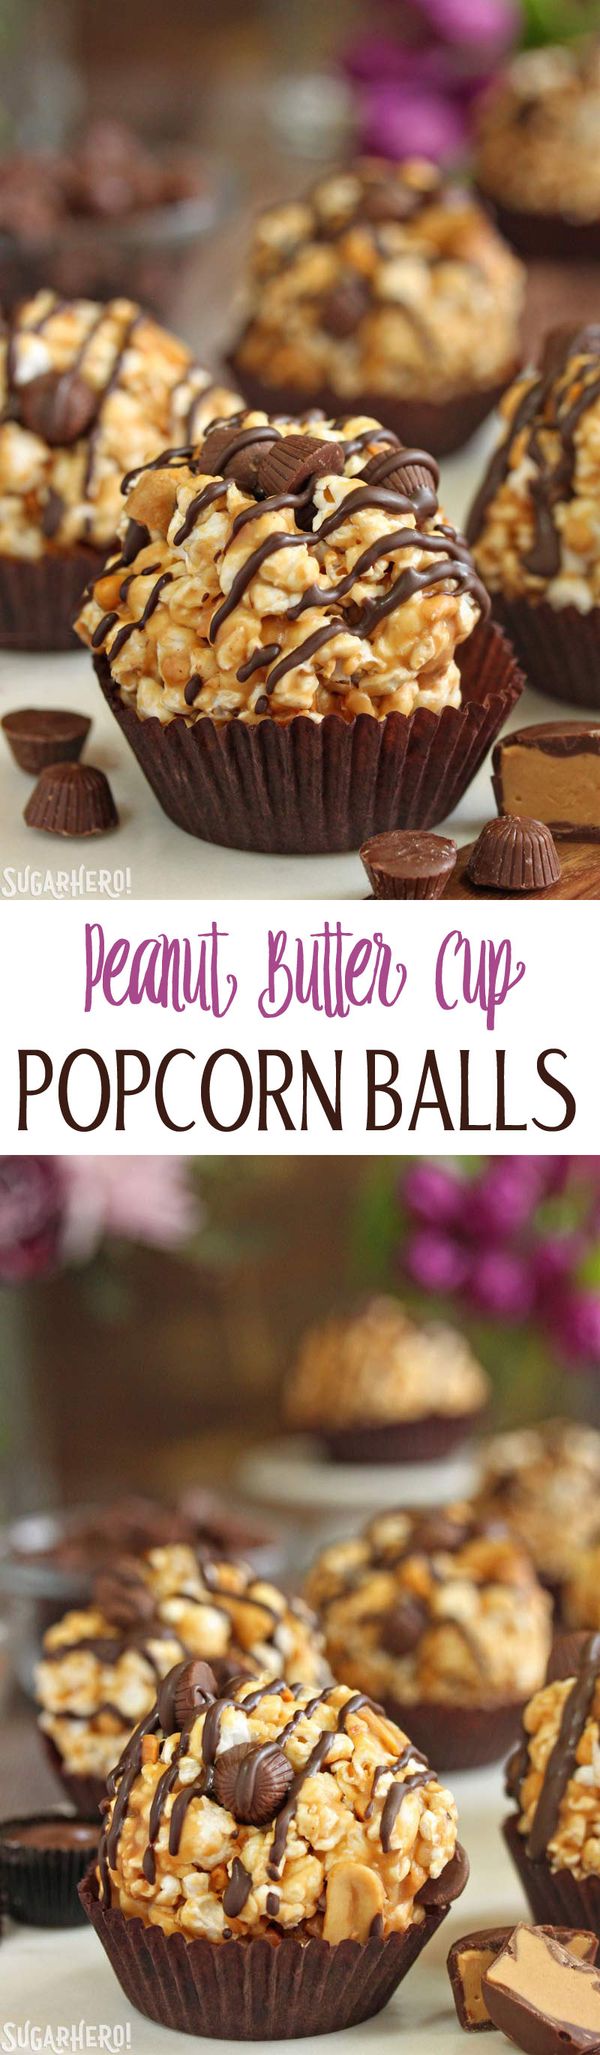 Peanut Butter Cup Popcorn Balls